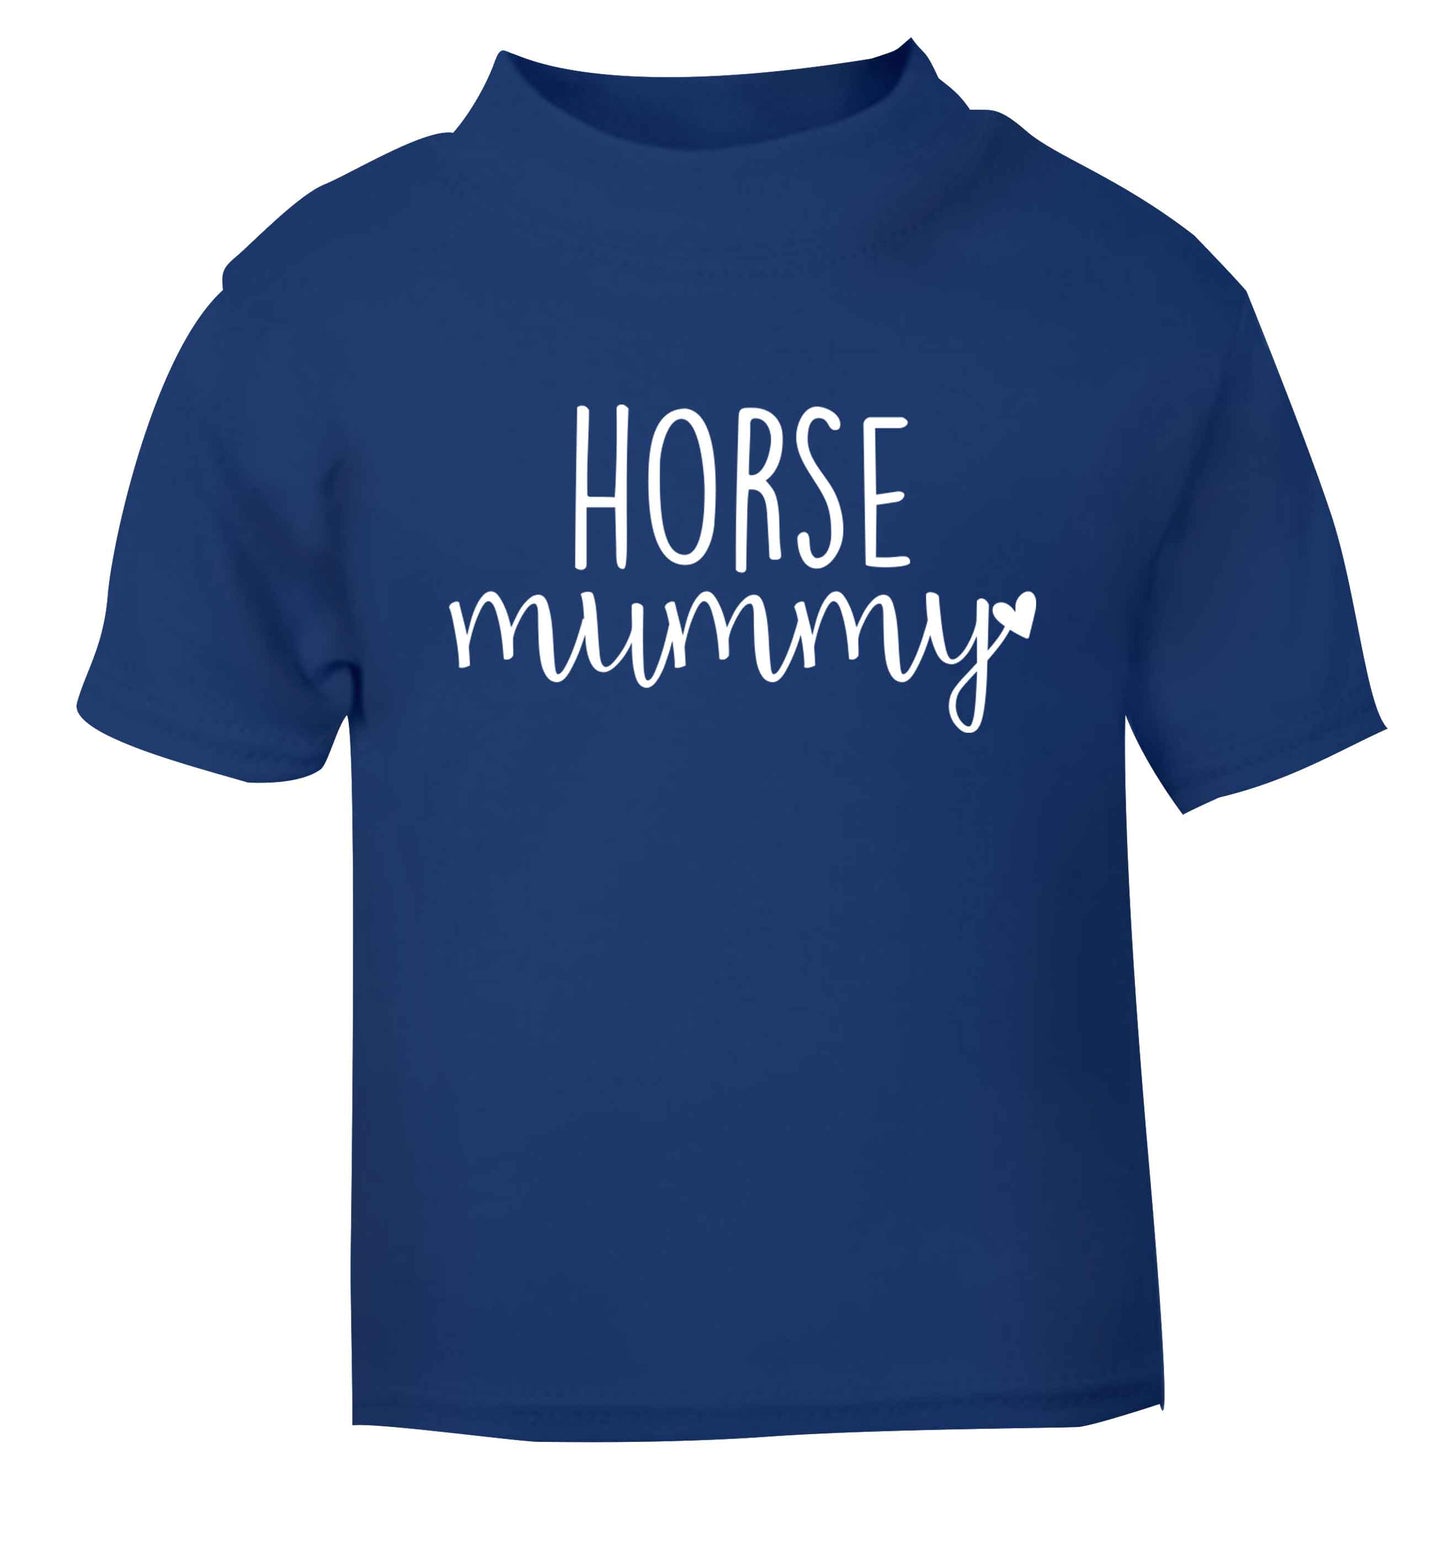 Horse mummy blue baby toddler Tshirt 2 Years